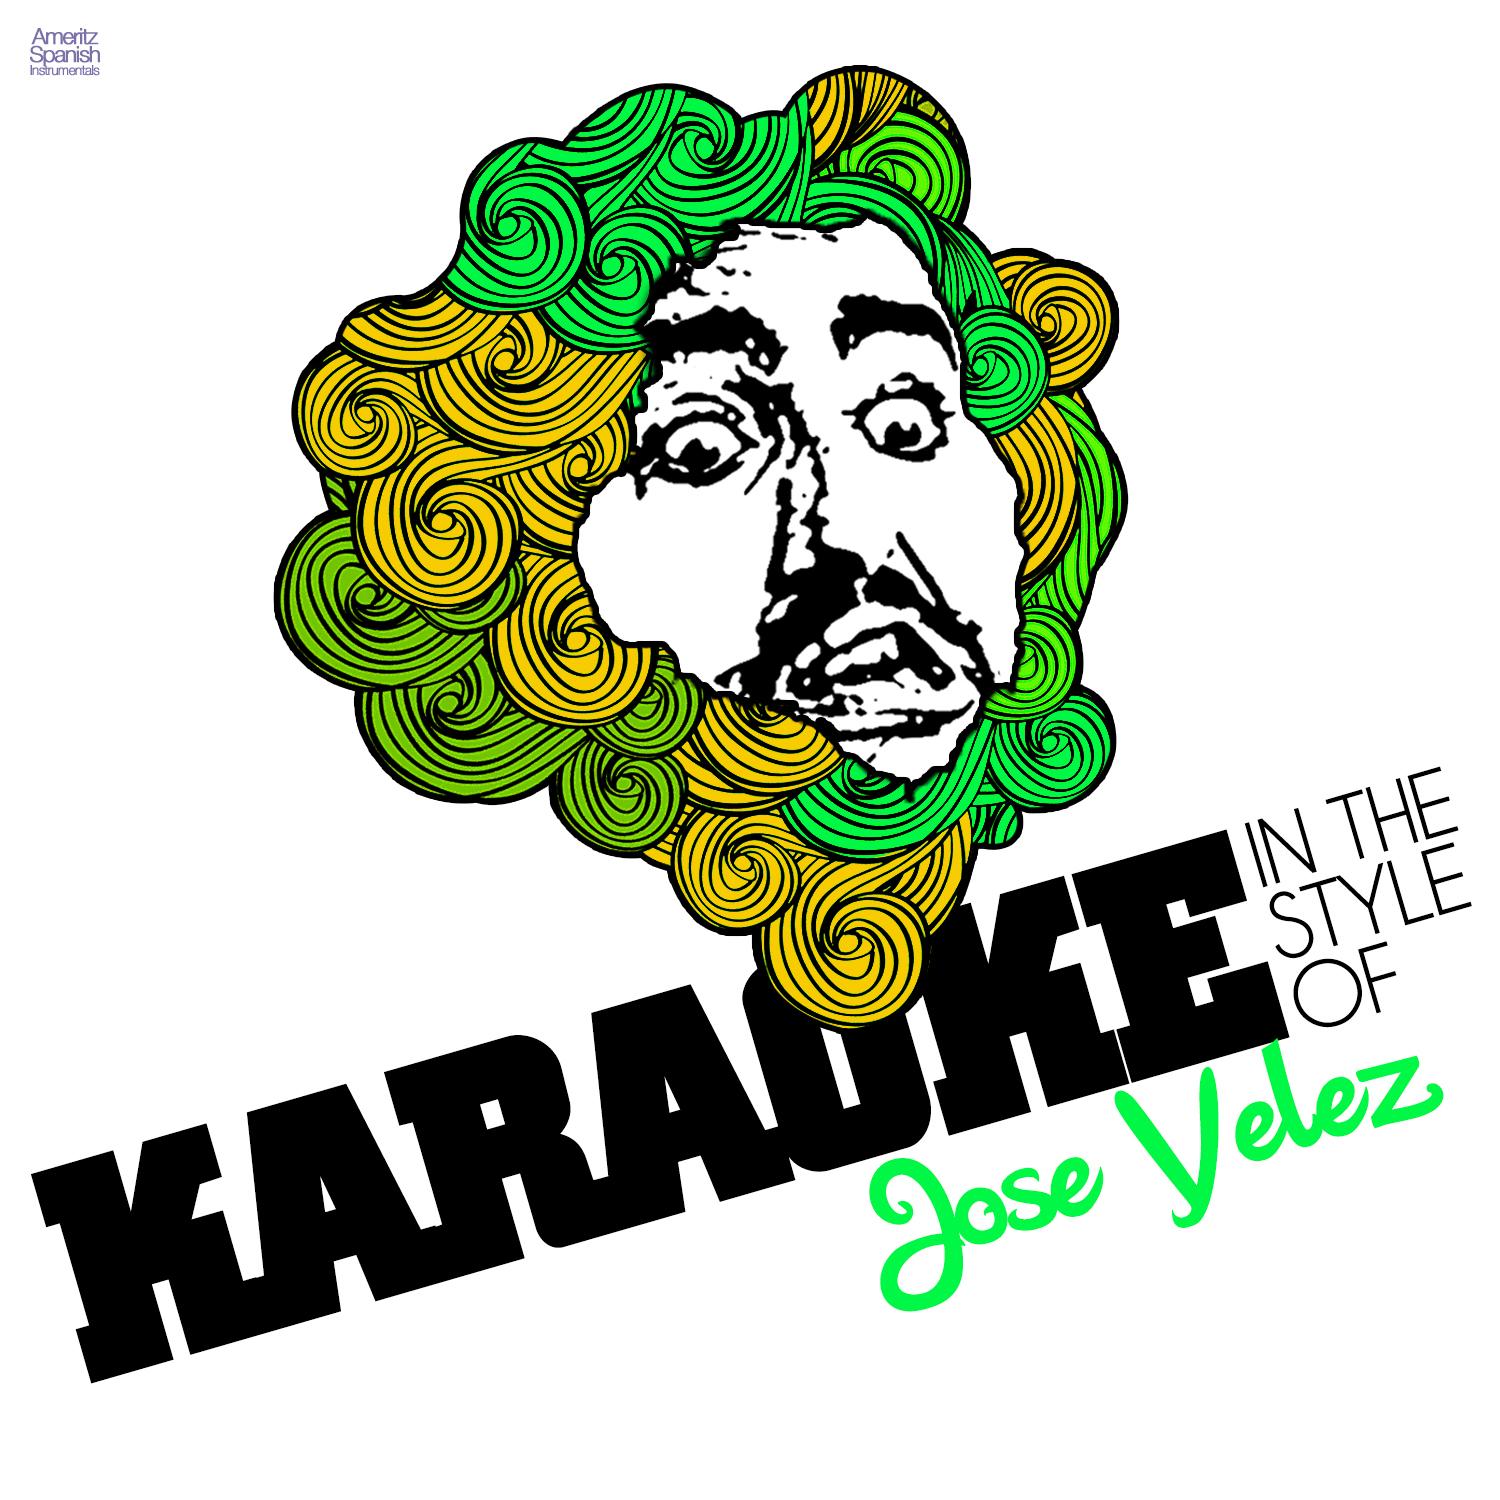 Karaoke - In the Style of Jose Velez